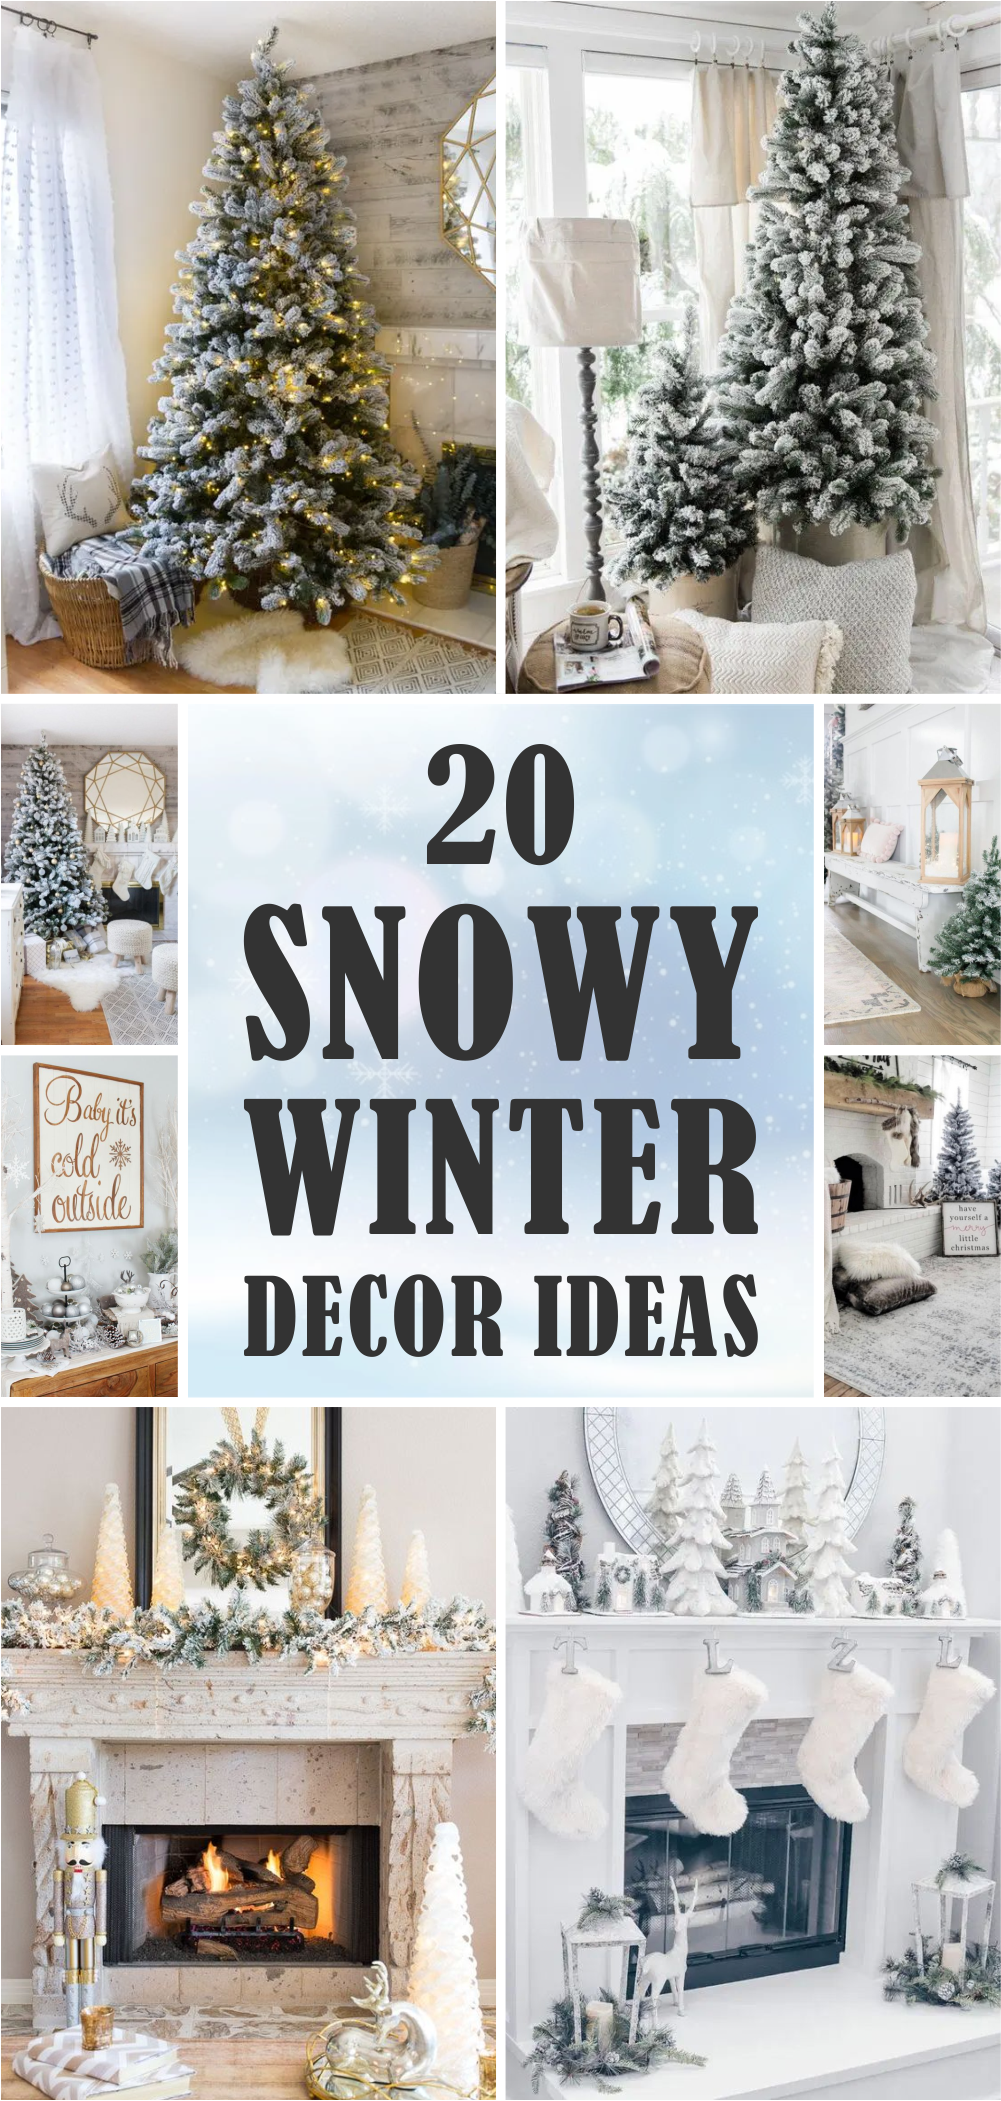 20 snowy winter decor ideas1